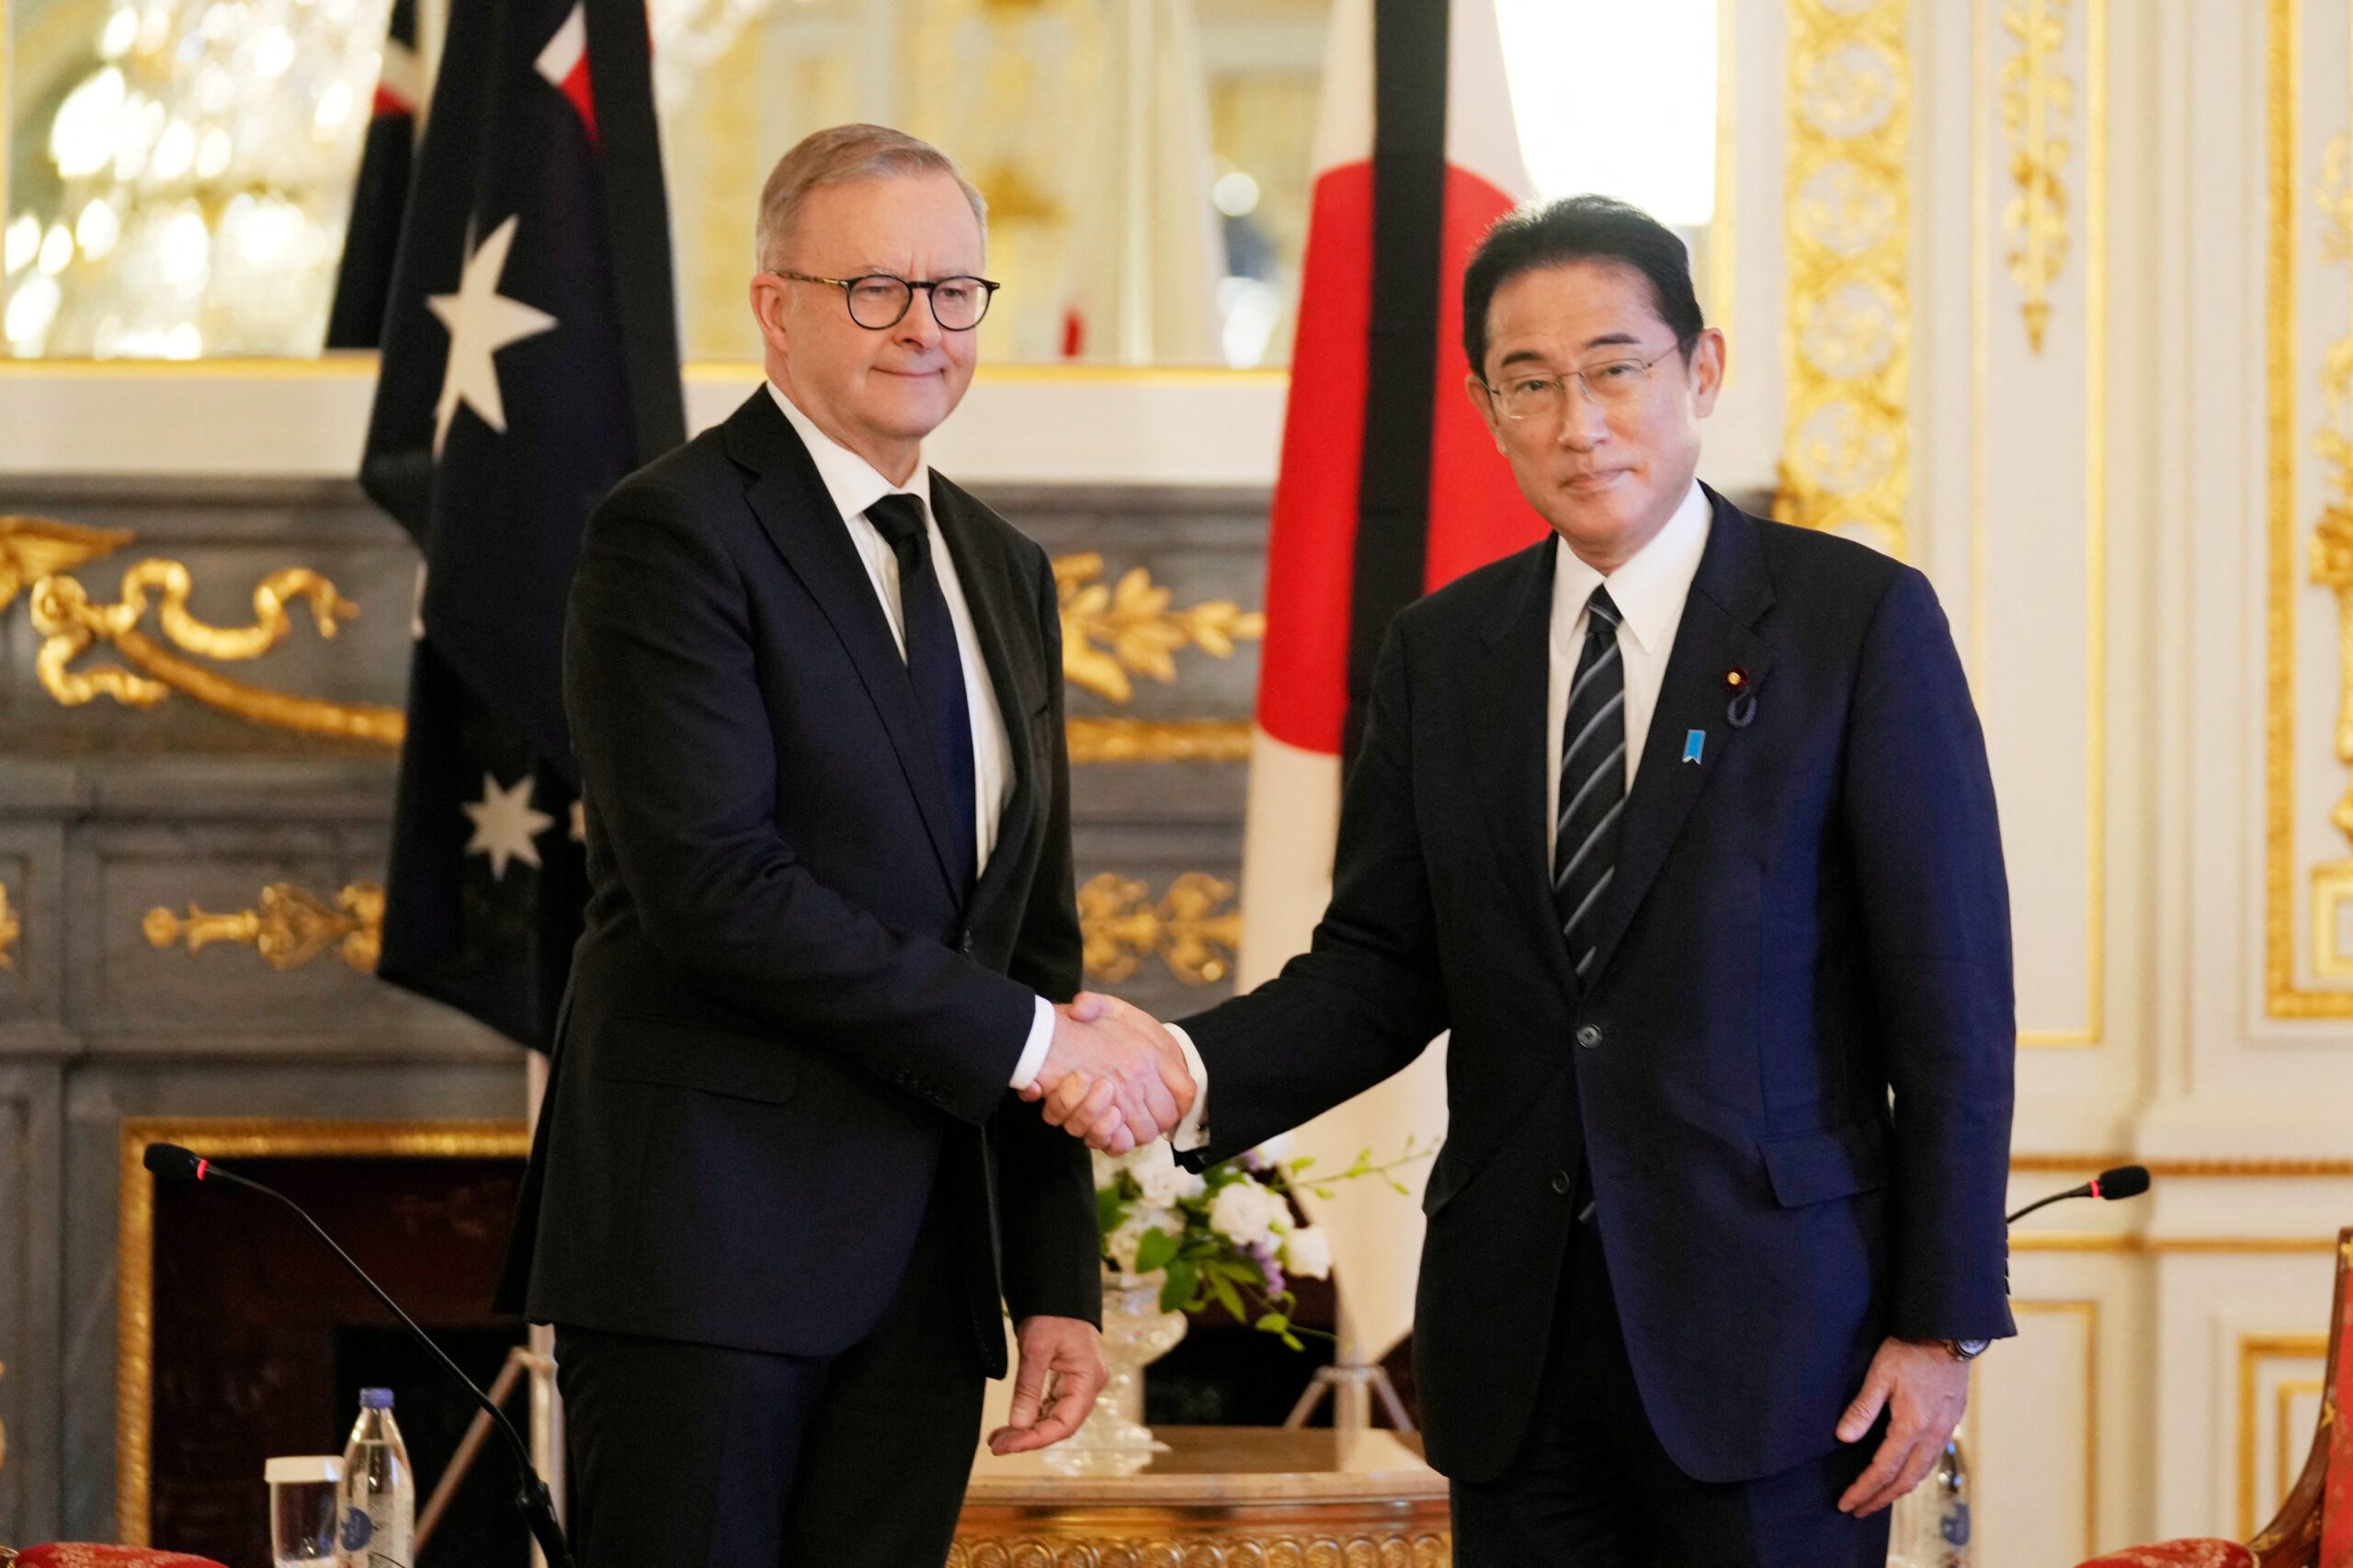 Energy, security on agenda when Australia, Japan leaders meet